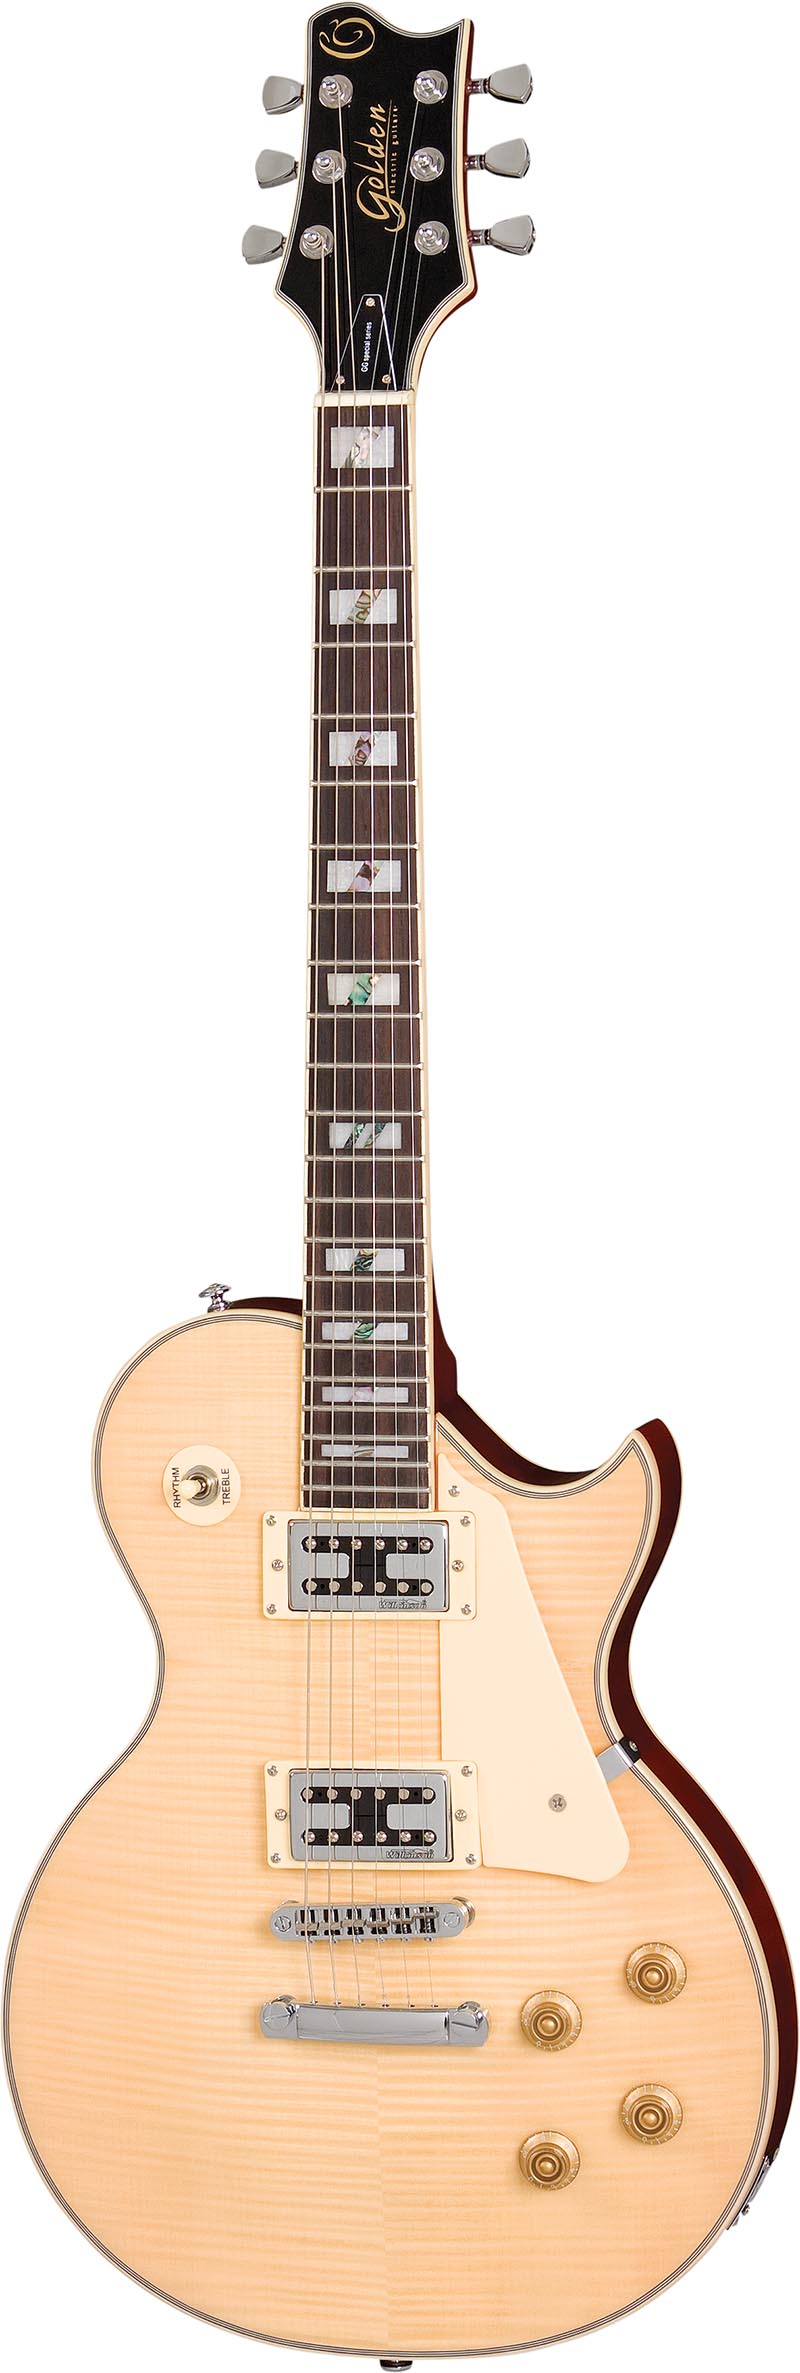 ggs500c guitarra eletrica lespaul tampo maple golden ggs500c nt natural visao frontal vertical